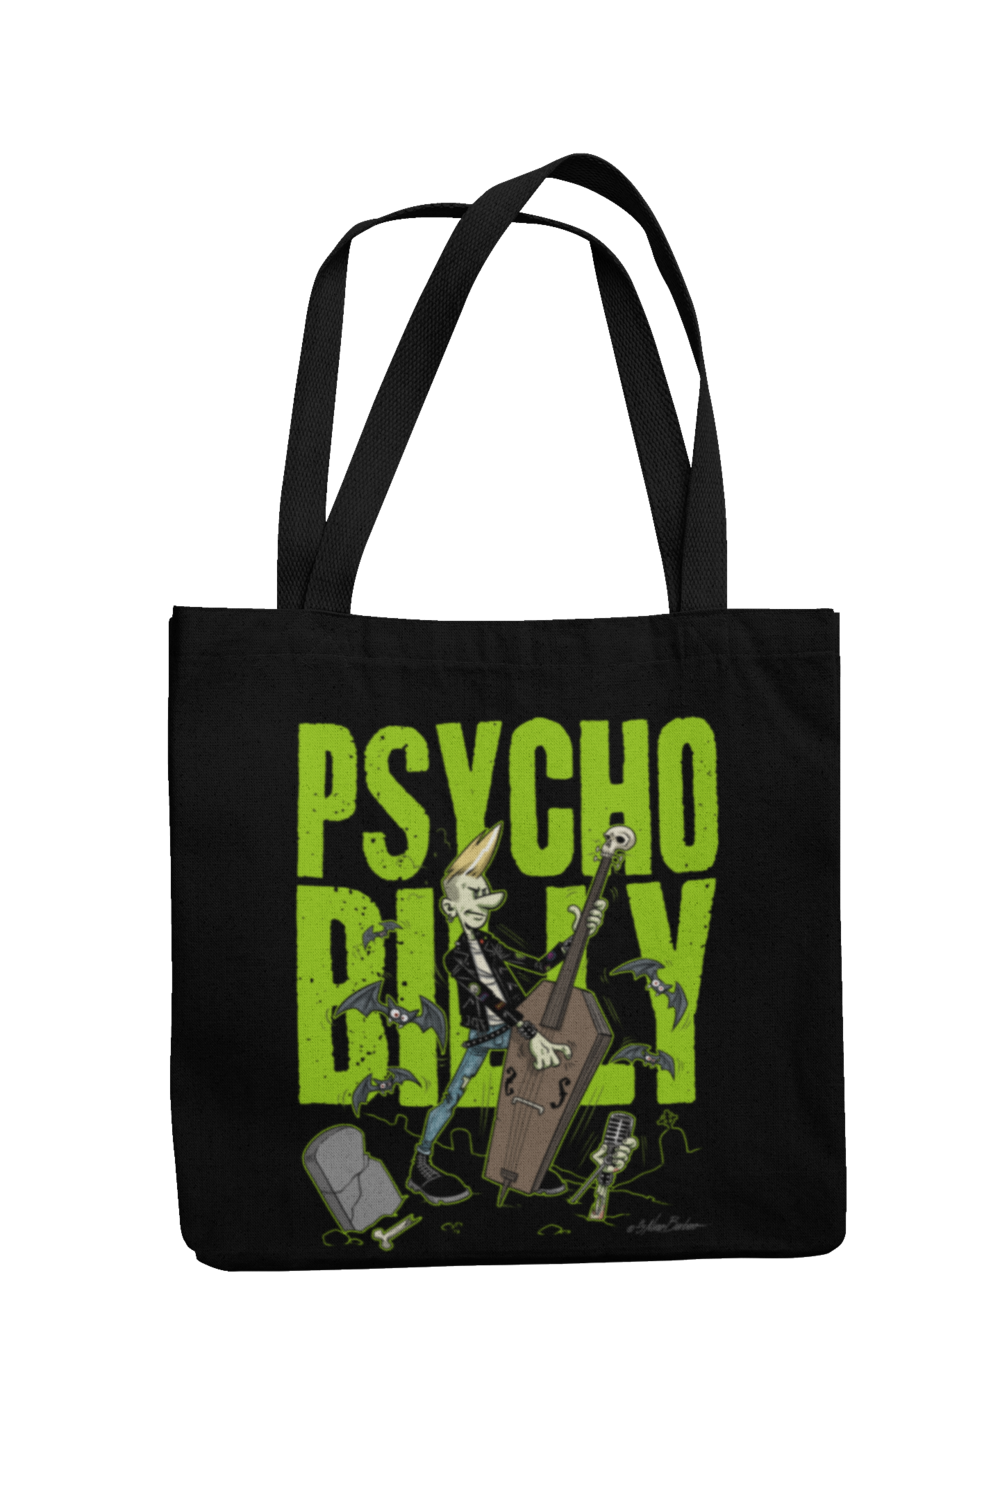 Cotton Bag Billy bang Psychobilly design by NANO BARBERO